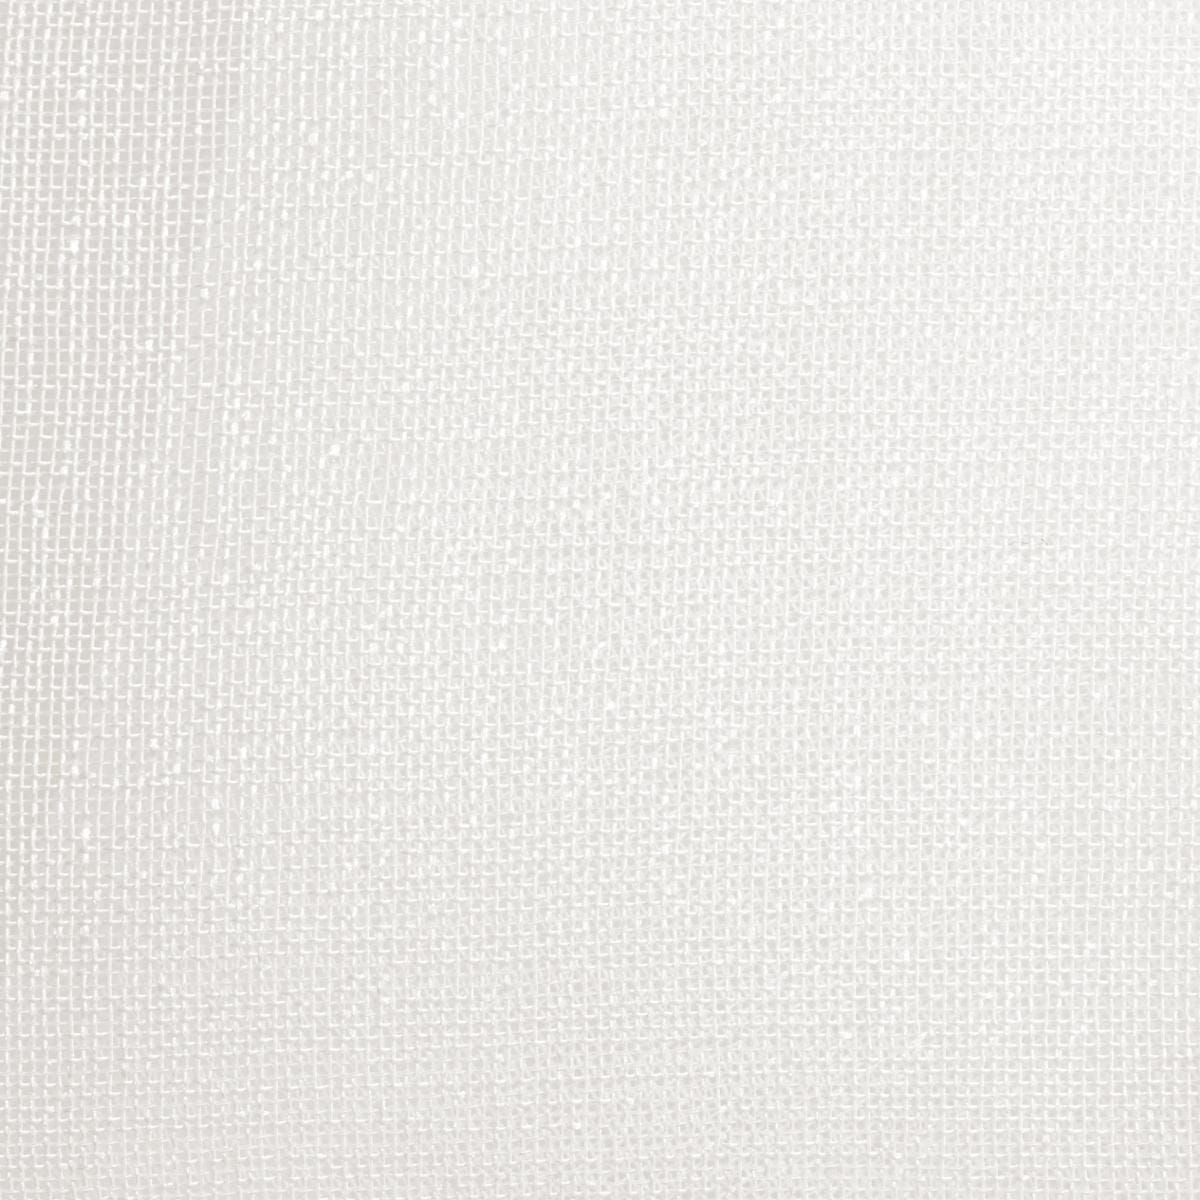 Cortina visillo de gasa blanca. 140cm x 240cm - Oma Home